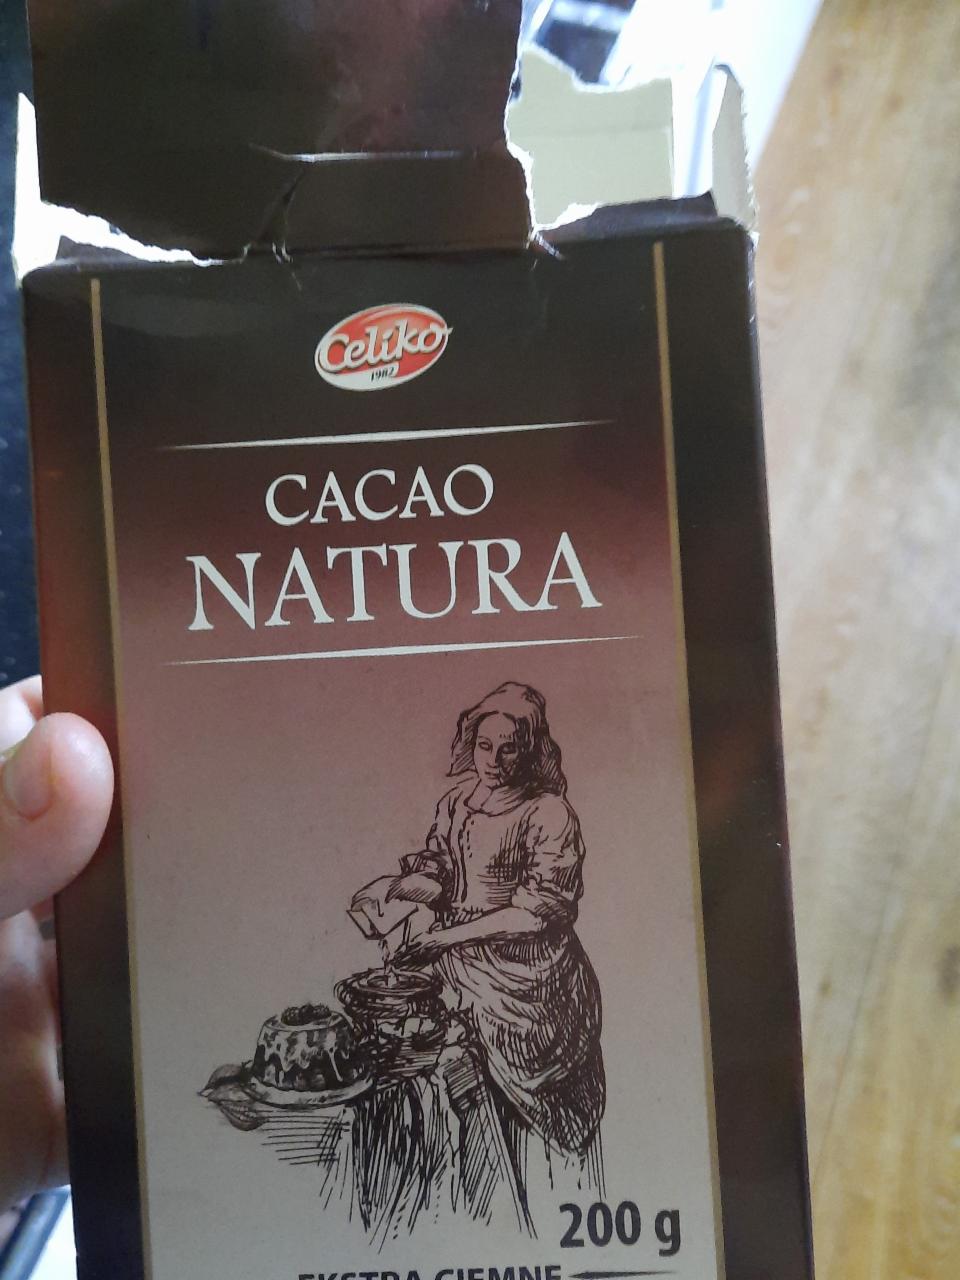 Zdjęcia - cacao natura celiko